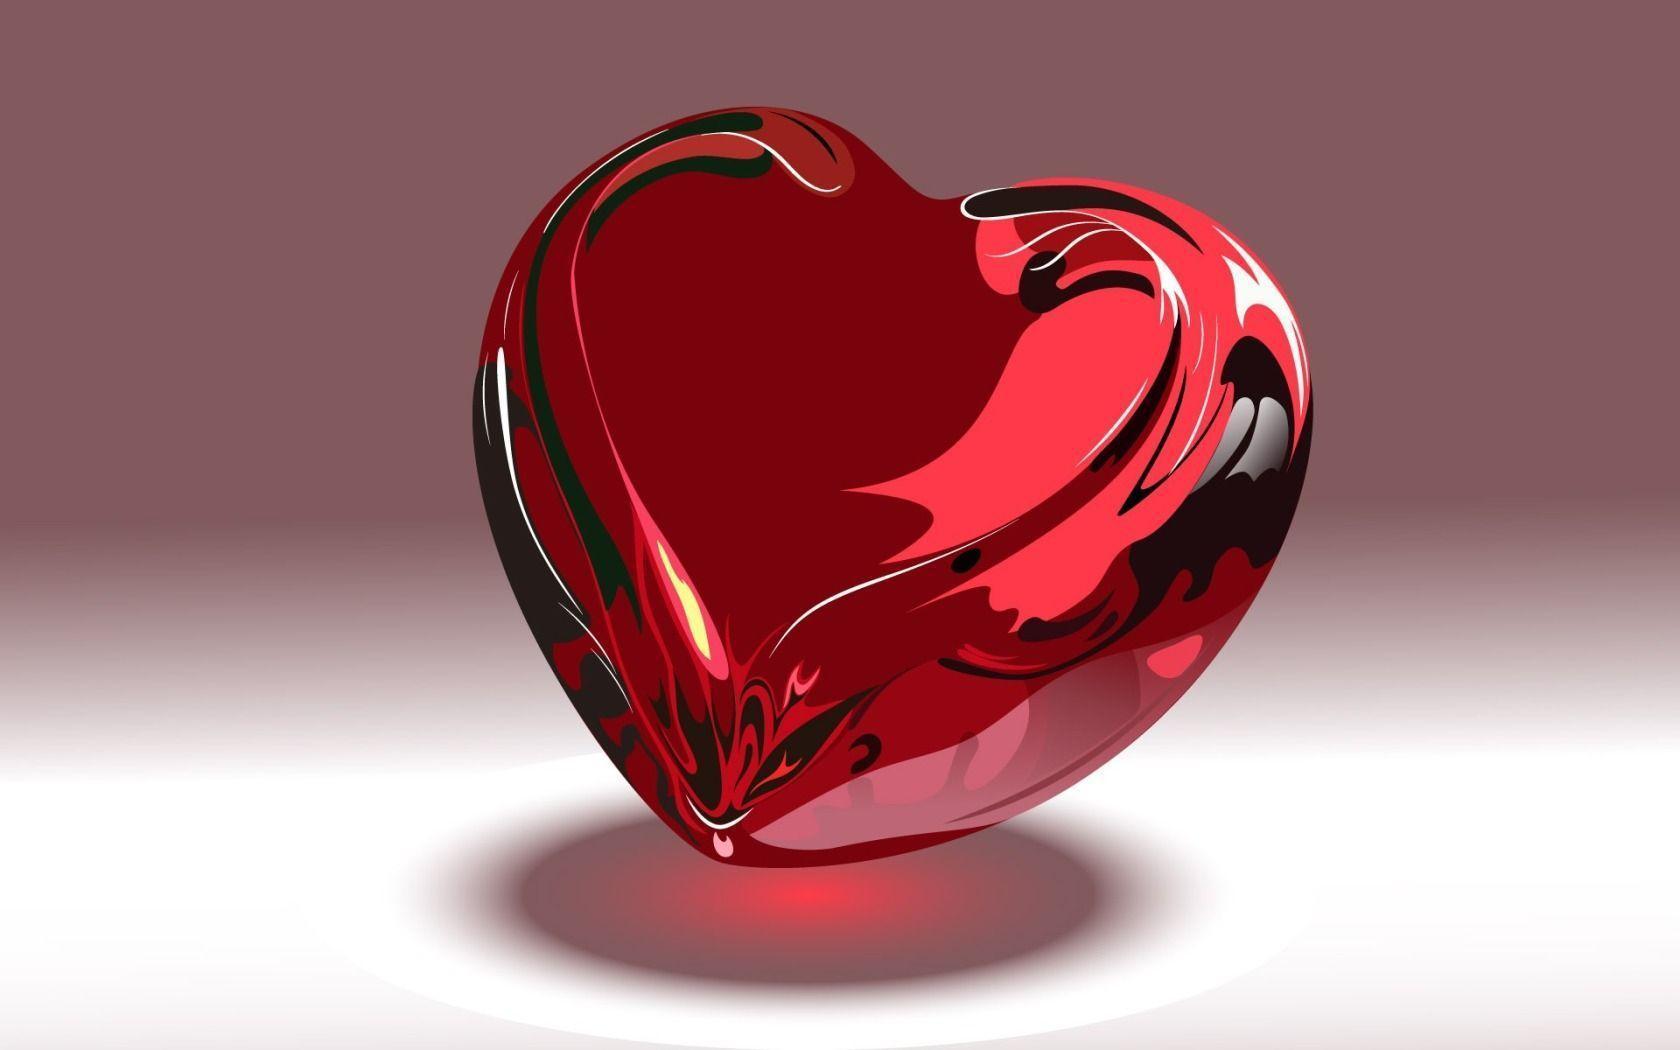 Shiny Red Heart widescreen wallpaper. Wide